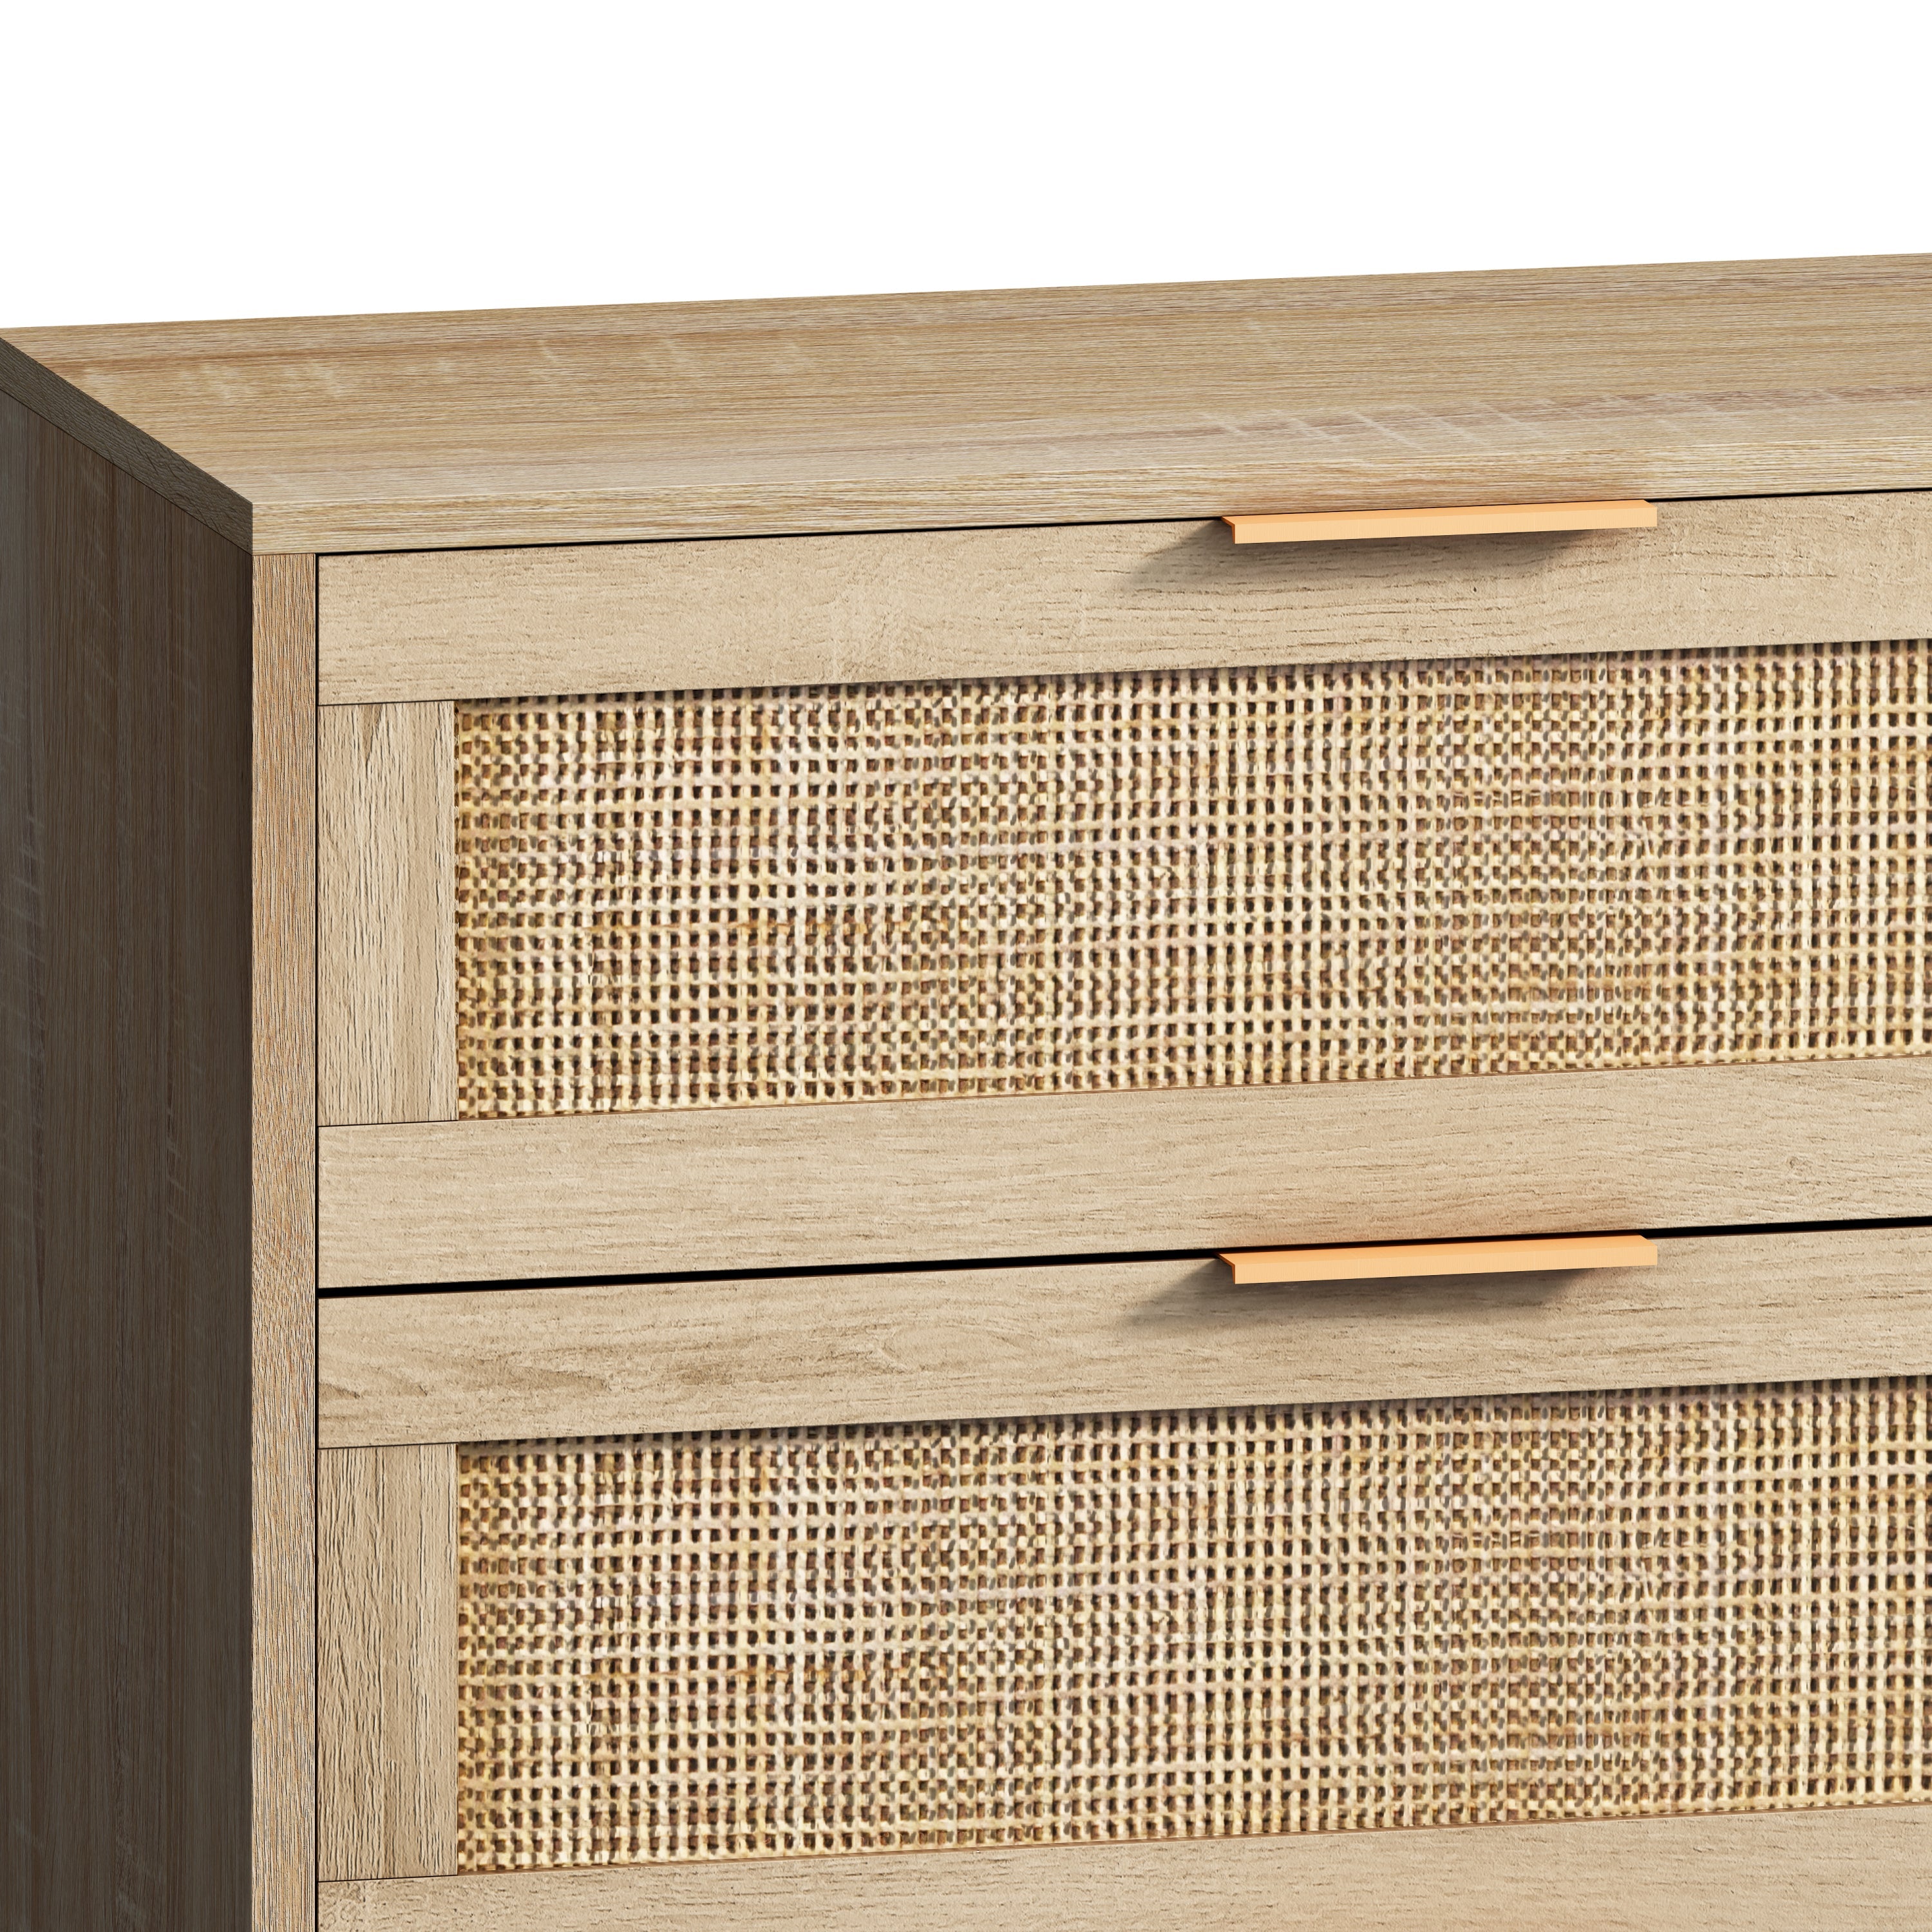 6-Drawer Rattan Storage Cabinet | Natural Rattan Drawer | Bedroom & Living Room Furniture | Space-Saving Solution